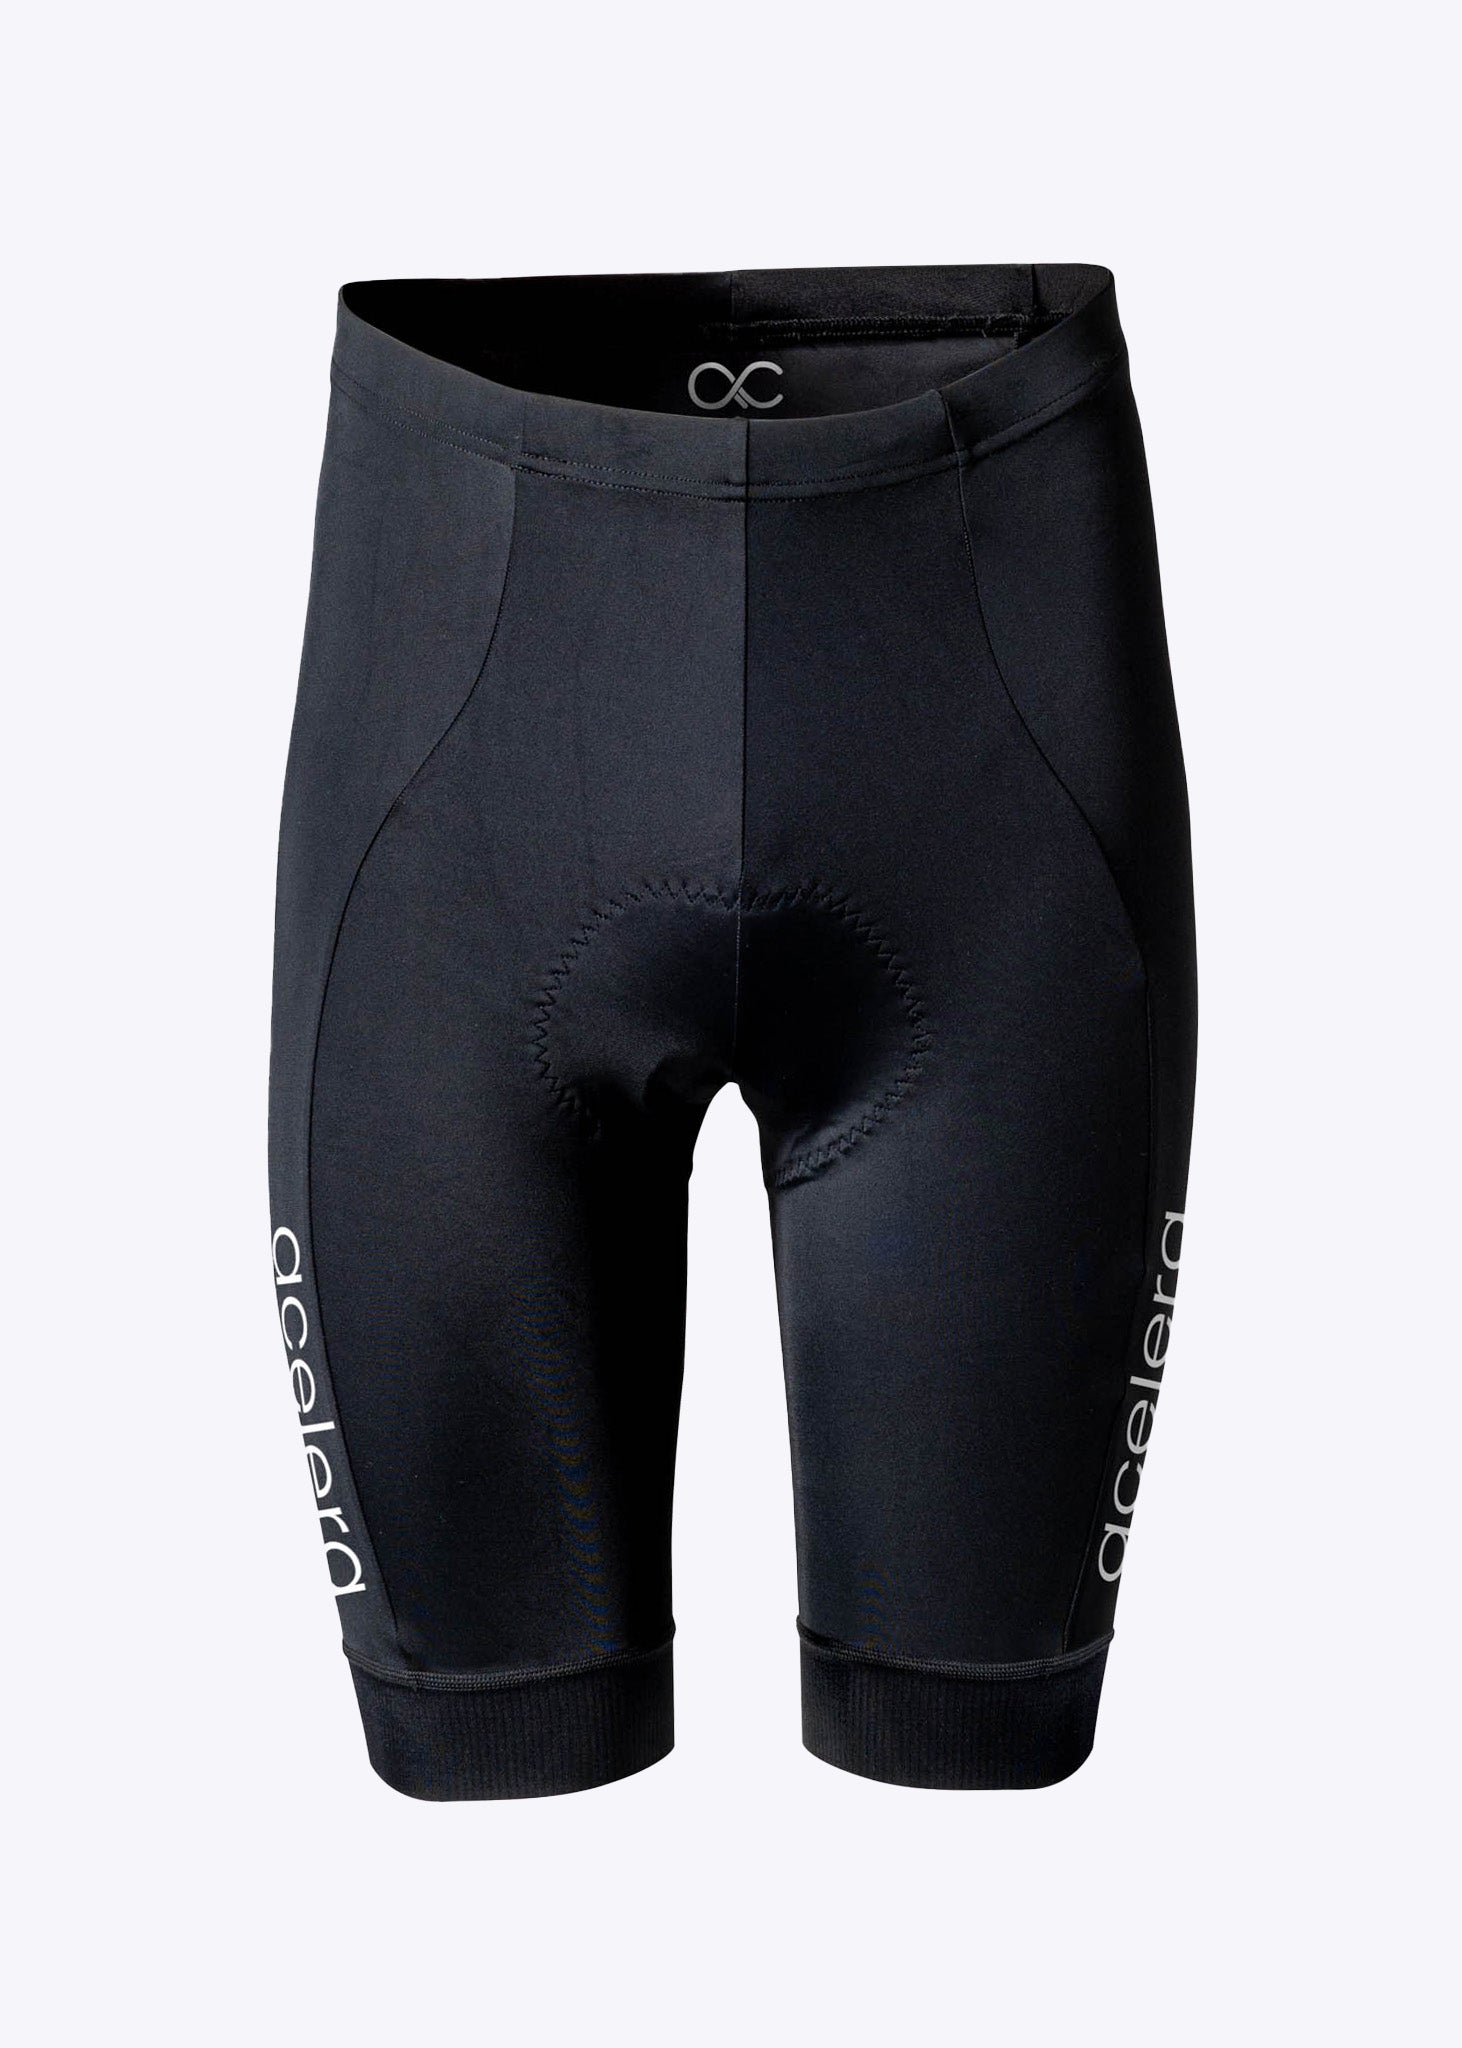 Essential Cycling Shorts